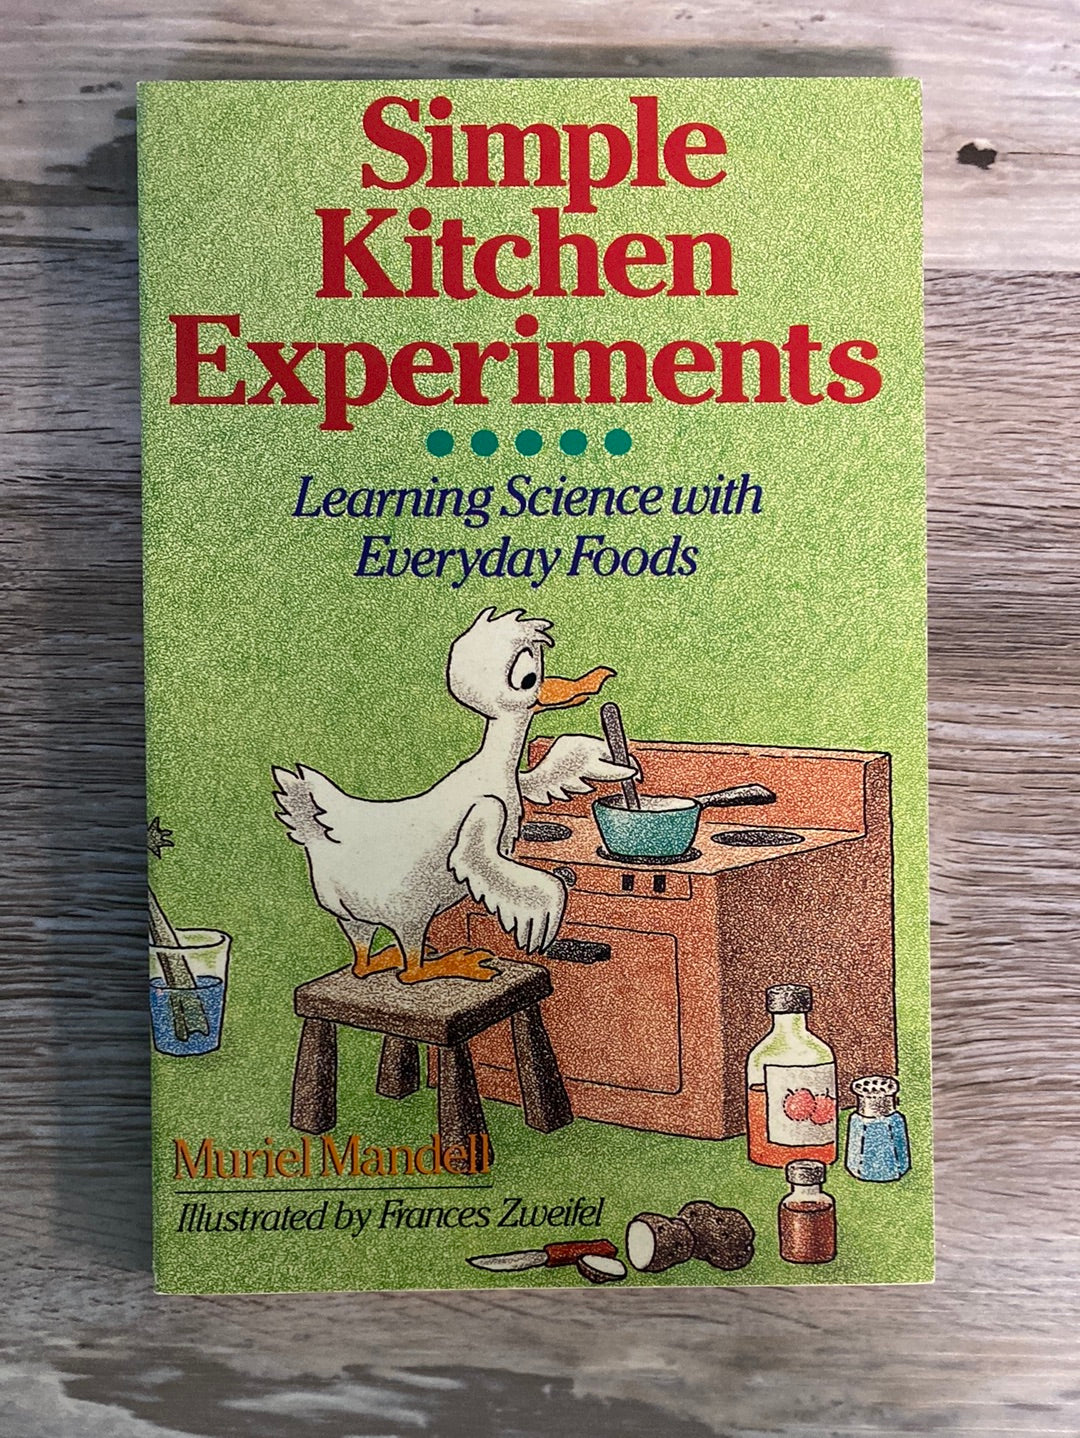 Simple Science Experiments 5 Book Set by Louis Loeschnig, Frances Zweifel